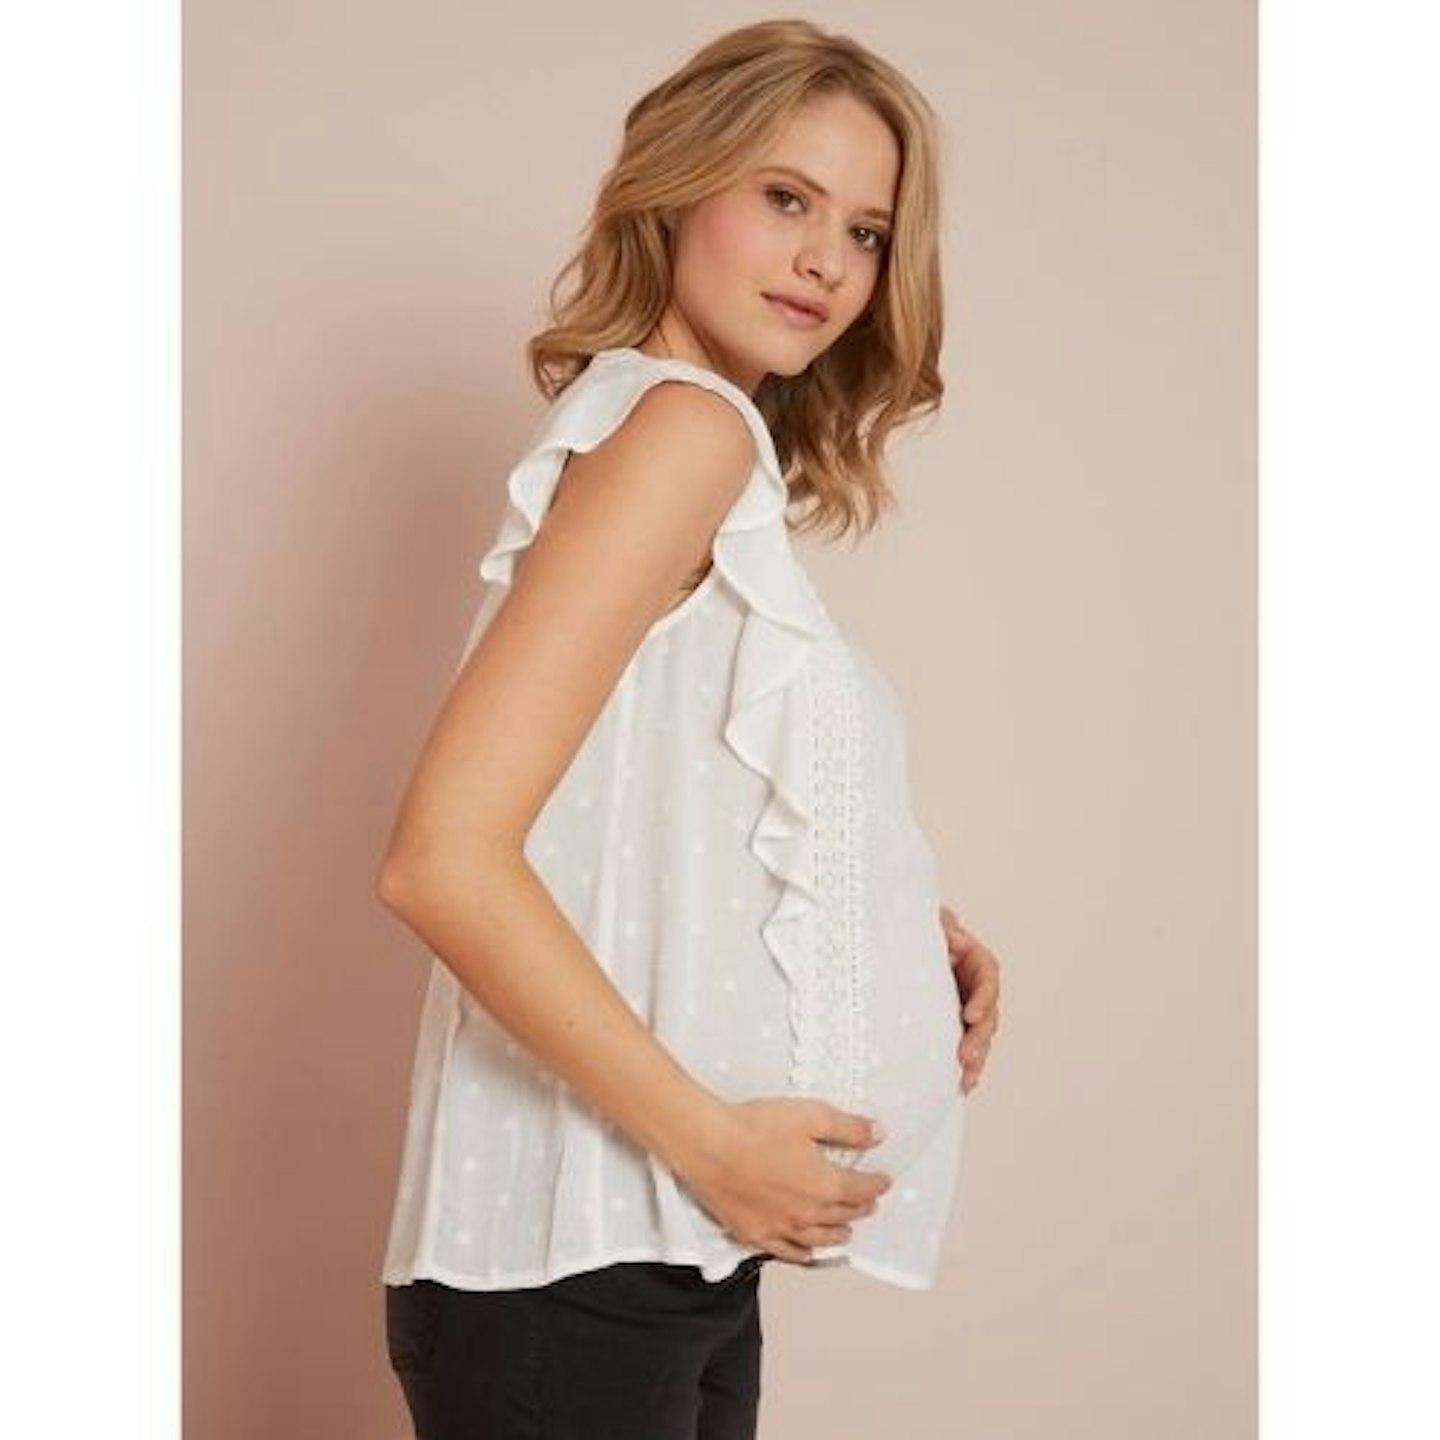 Plumetis u0026amp; Macramu00e9 blouse for maternity